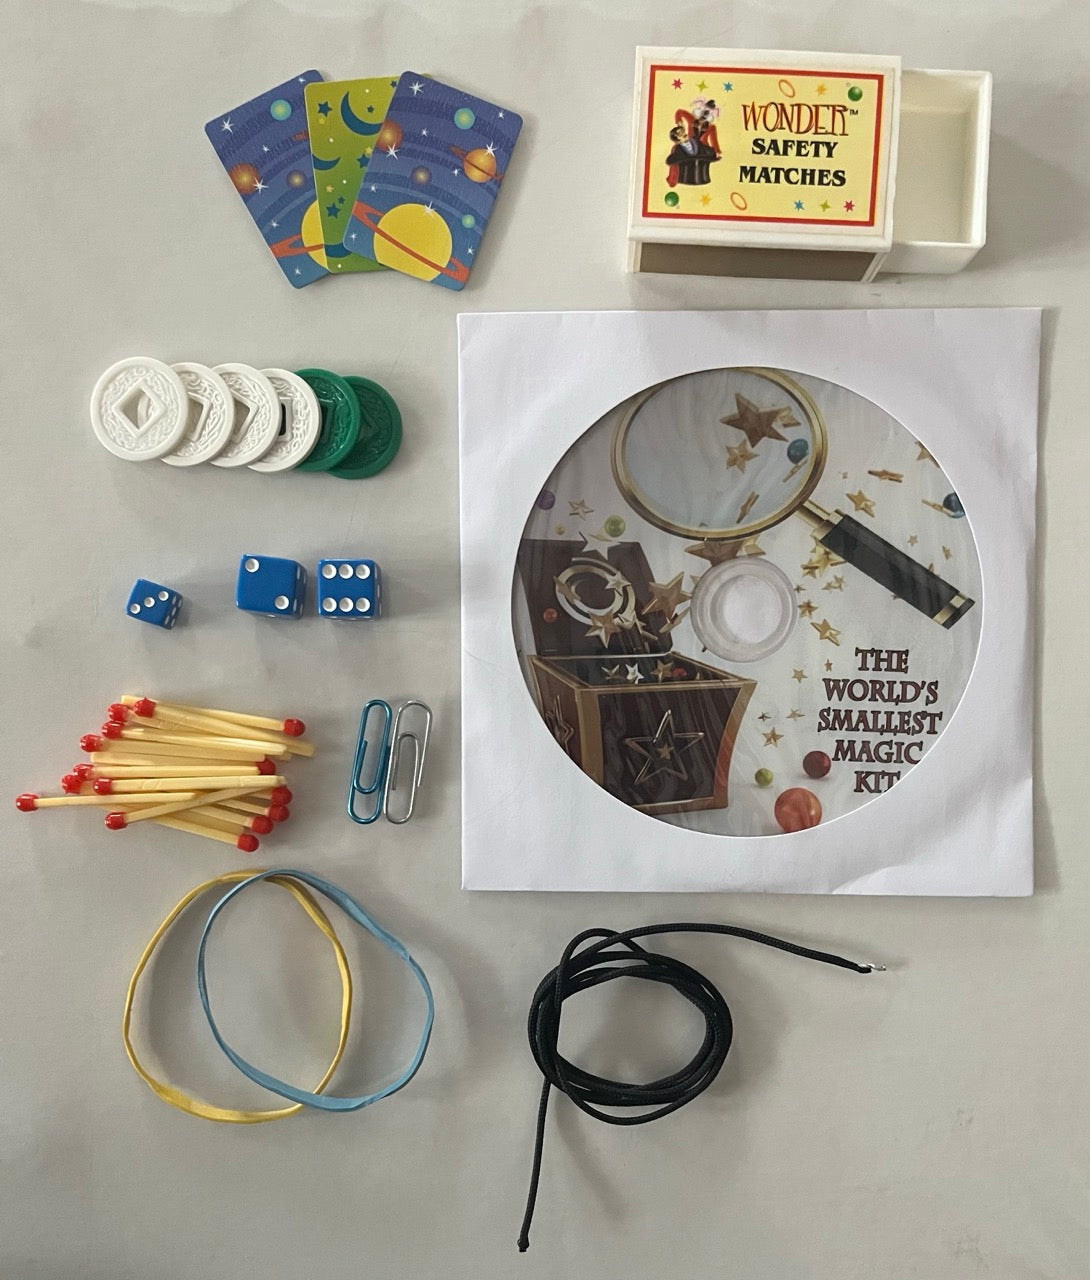 The World's Smallest Magic Kit - Don Bursell (SM4)